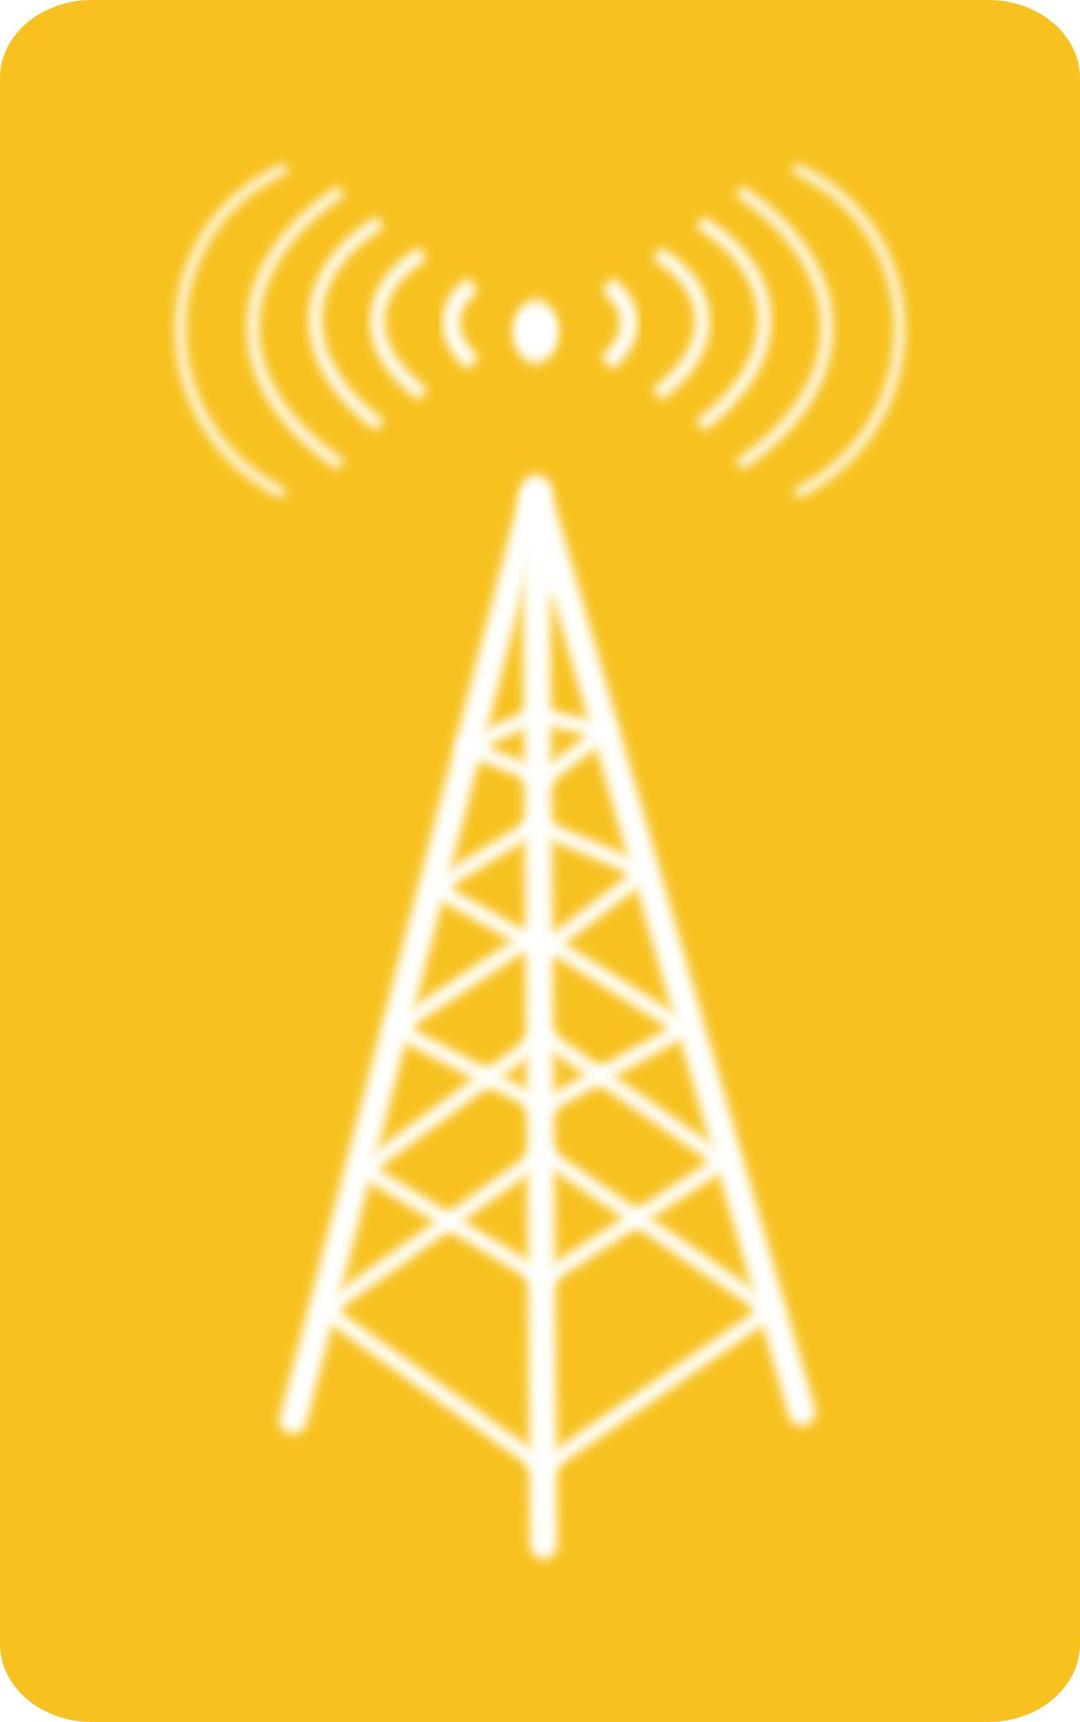 Wifi Broadband Antenna icon png transparent